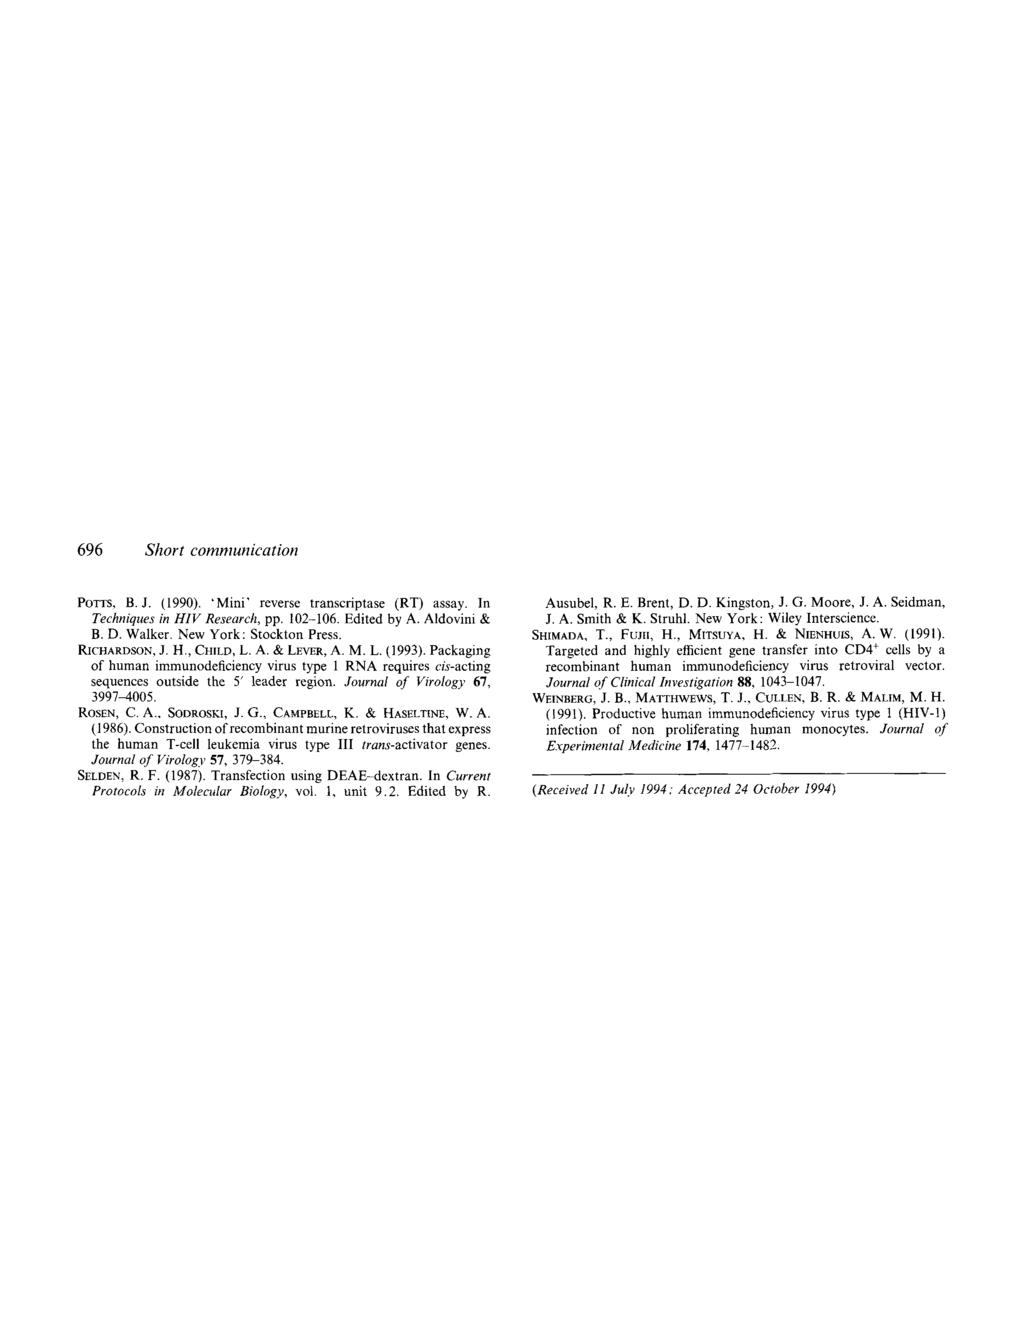 696 Short communication POTTS, B.J. (1990). ~Mini' reverse transcriptase (RT) assay. In Techniques in H1V Research, pp. 102-106. Edited by A. Aldovini & B. D. Walker. New York: Stockton Press.